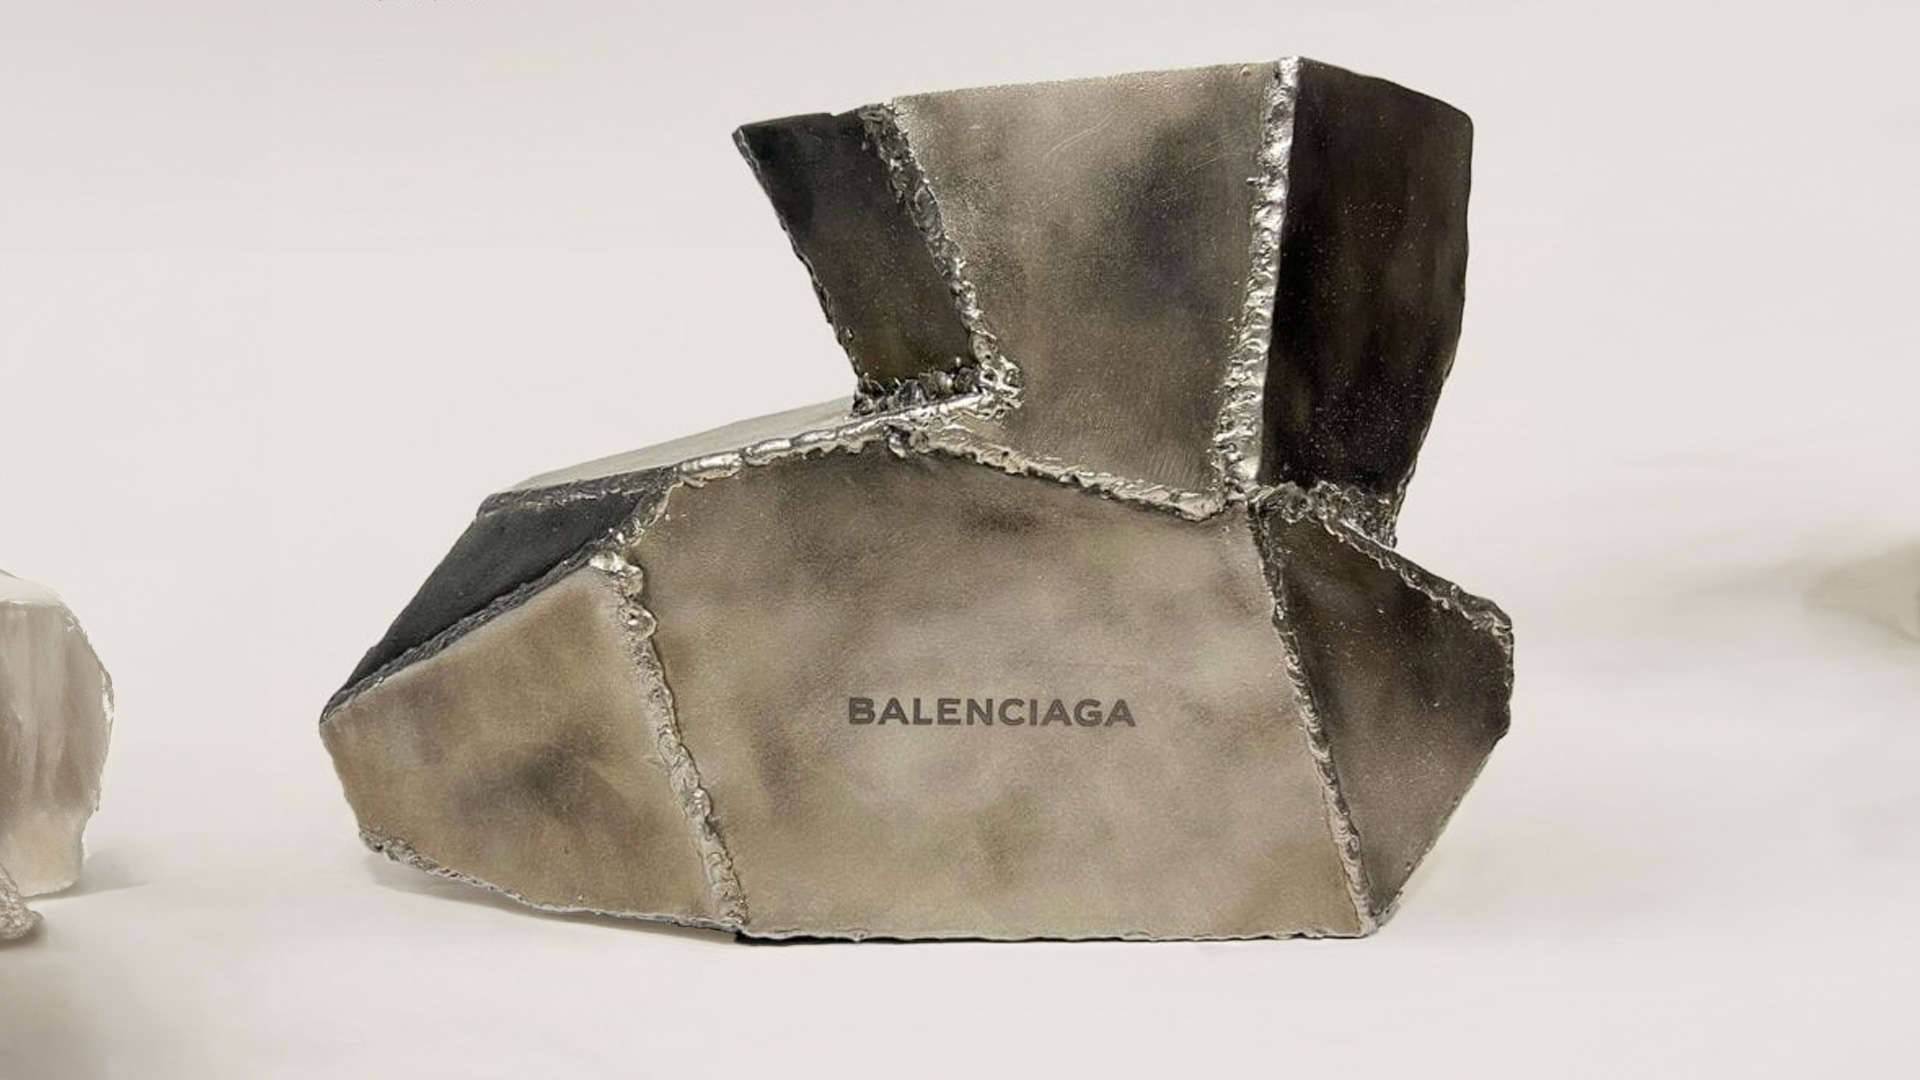 Balenciaga Shoe “Just Metal” Wins The Most Impractical Award